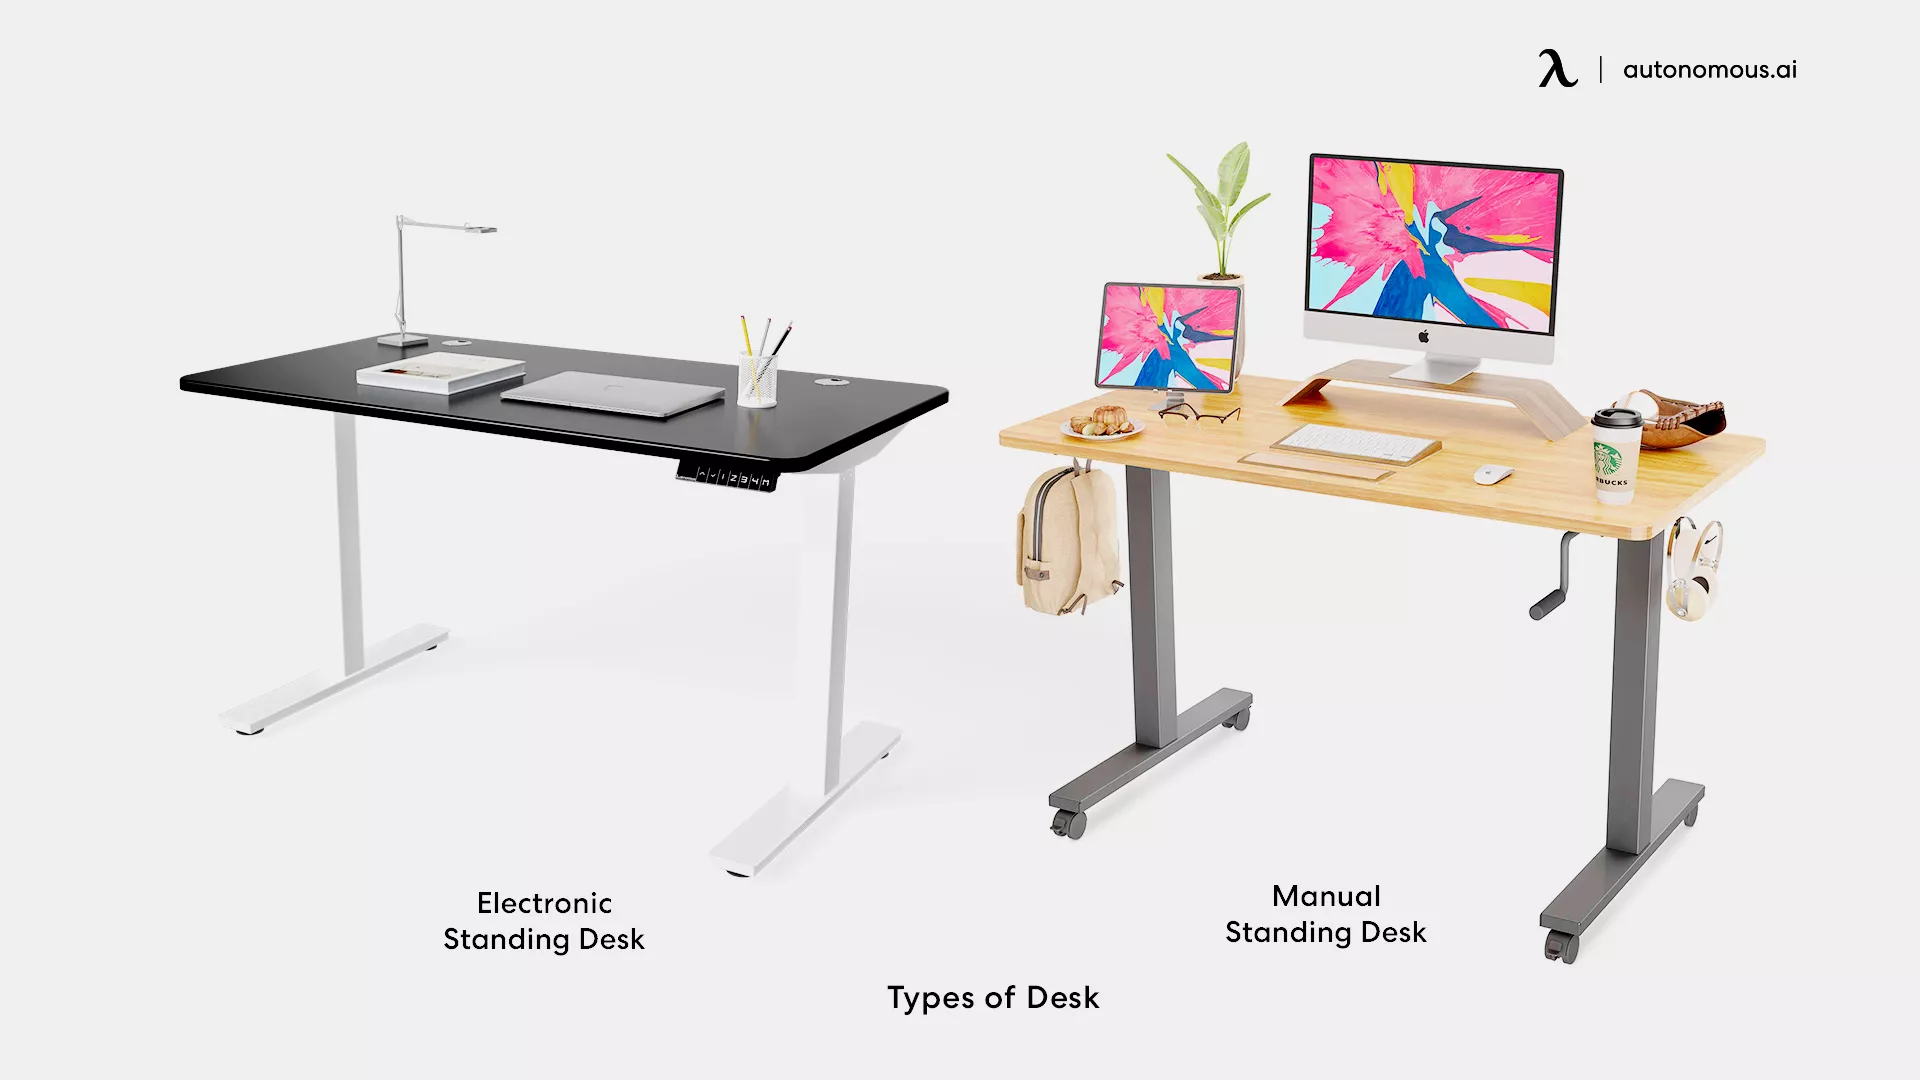 Type of Desk